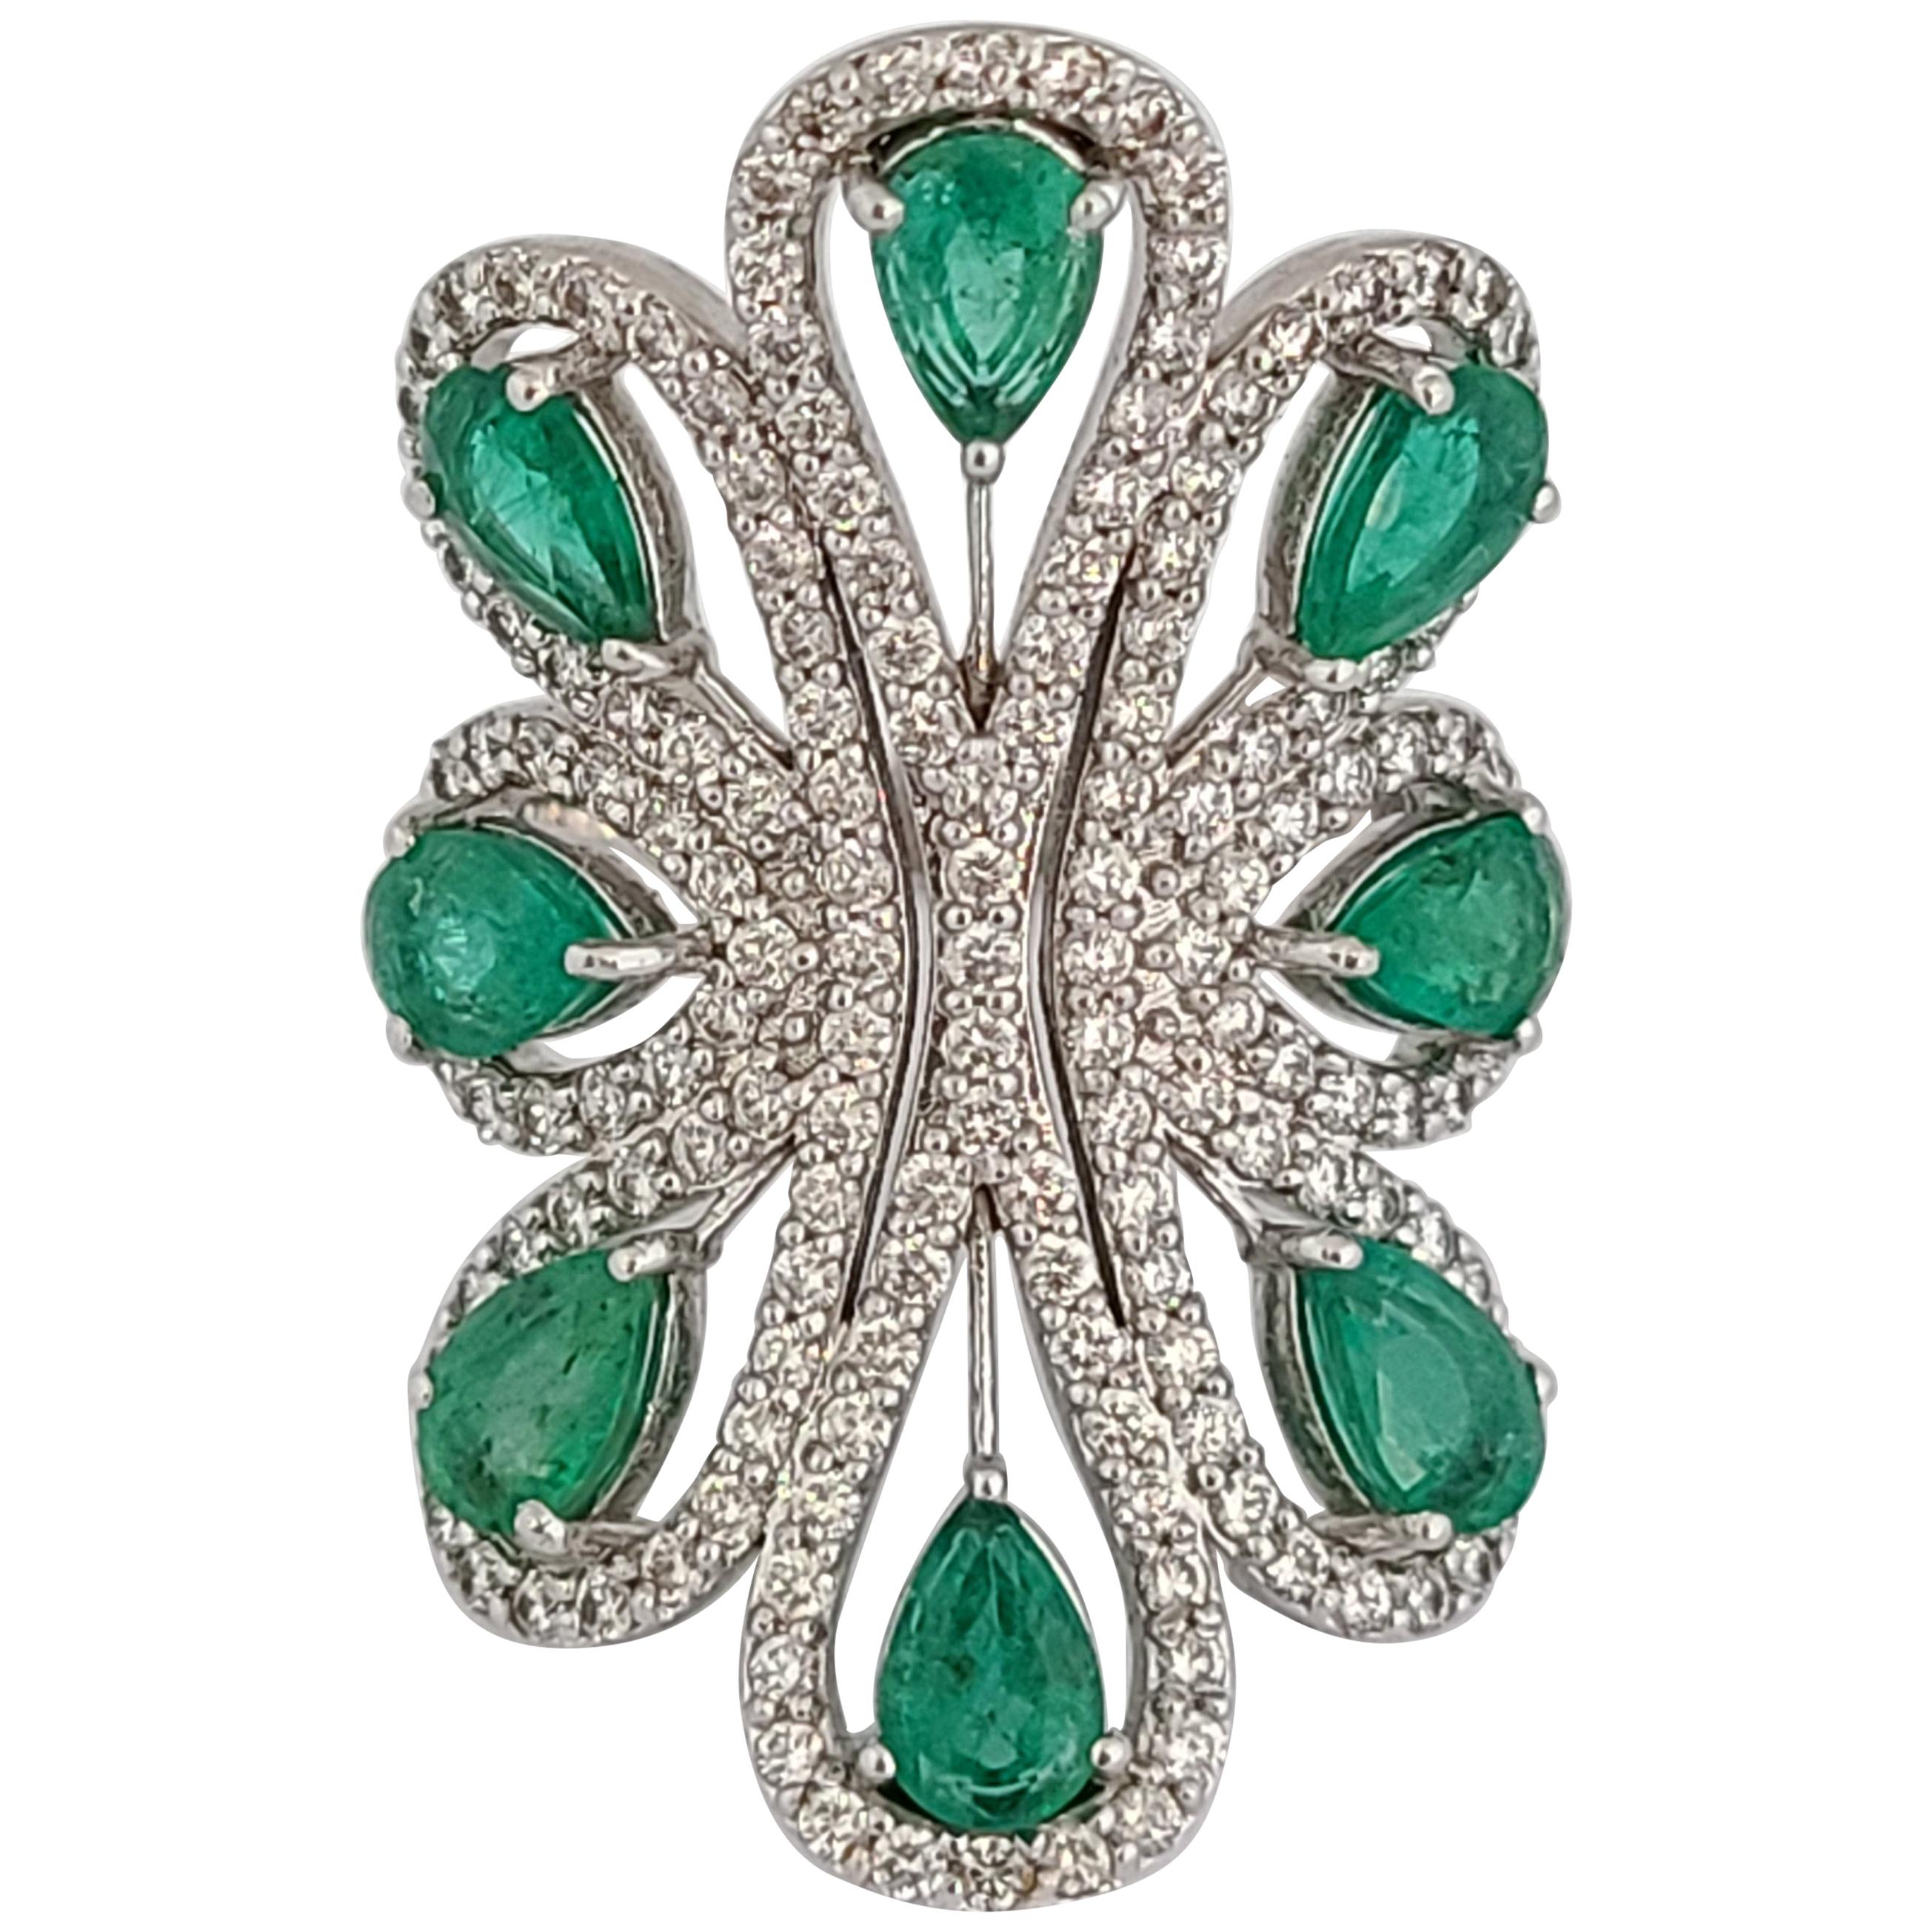 Natural Emerald Ring Set in 18 Karat Gold with Diamonds